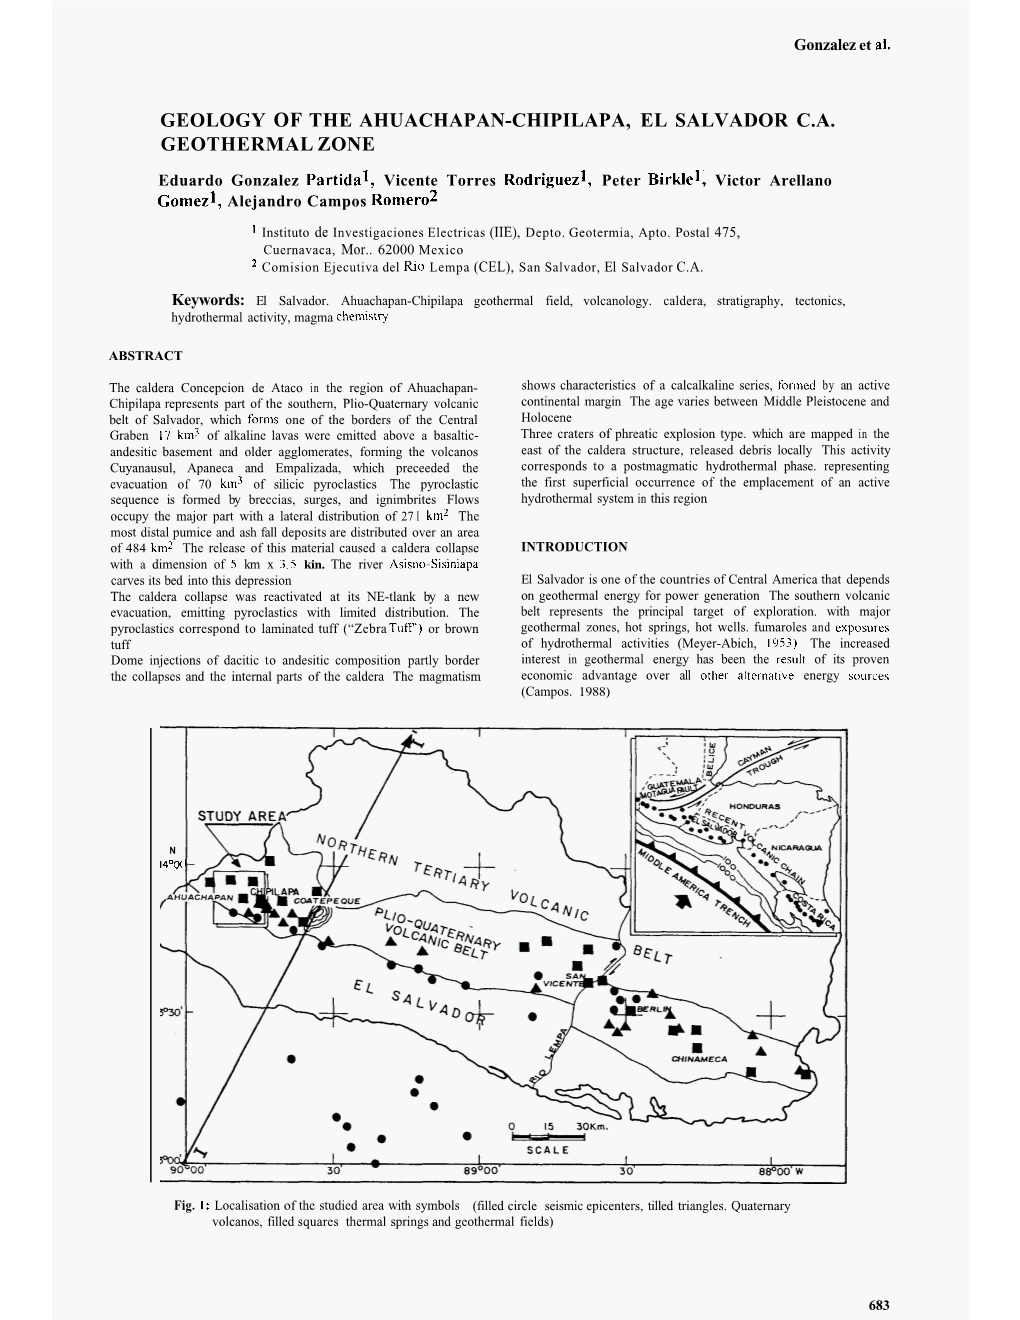 Geology of the Ahuachapan-Chipilapa, El Salvador C.A